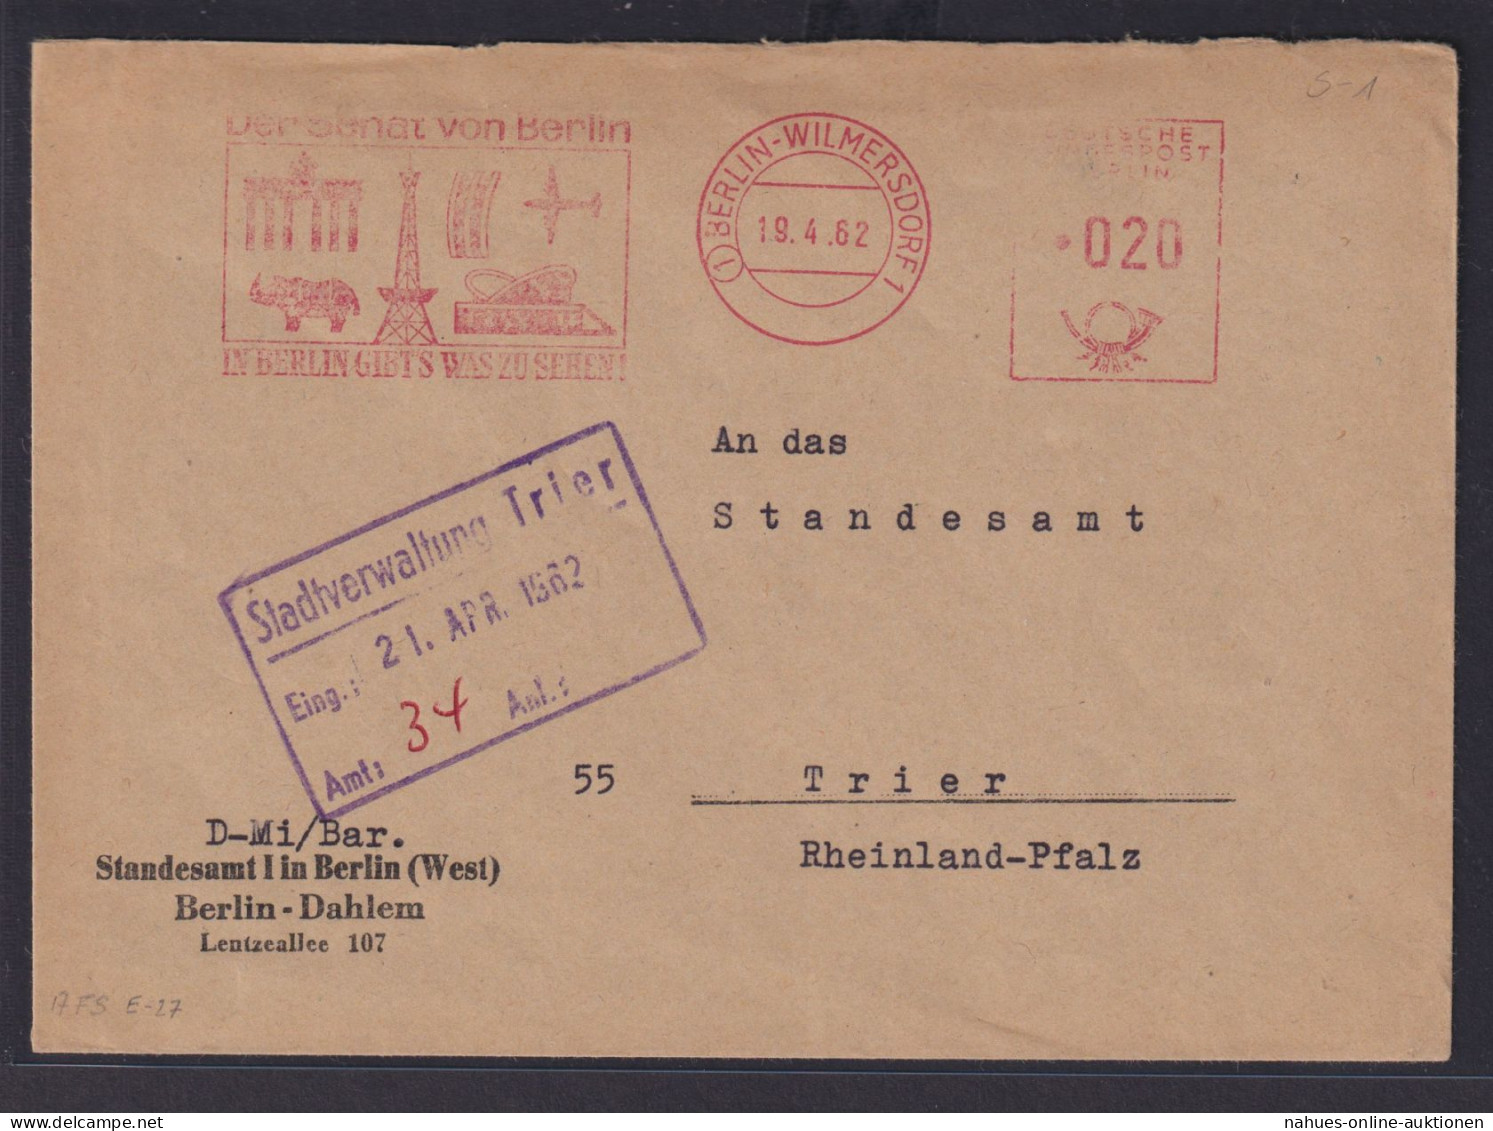 Berlin Brief Sonder Maschinenstempel Brandenburger Tor Funkturm AFS 020 DM - Lettres & Documents